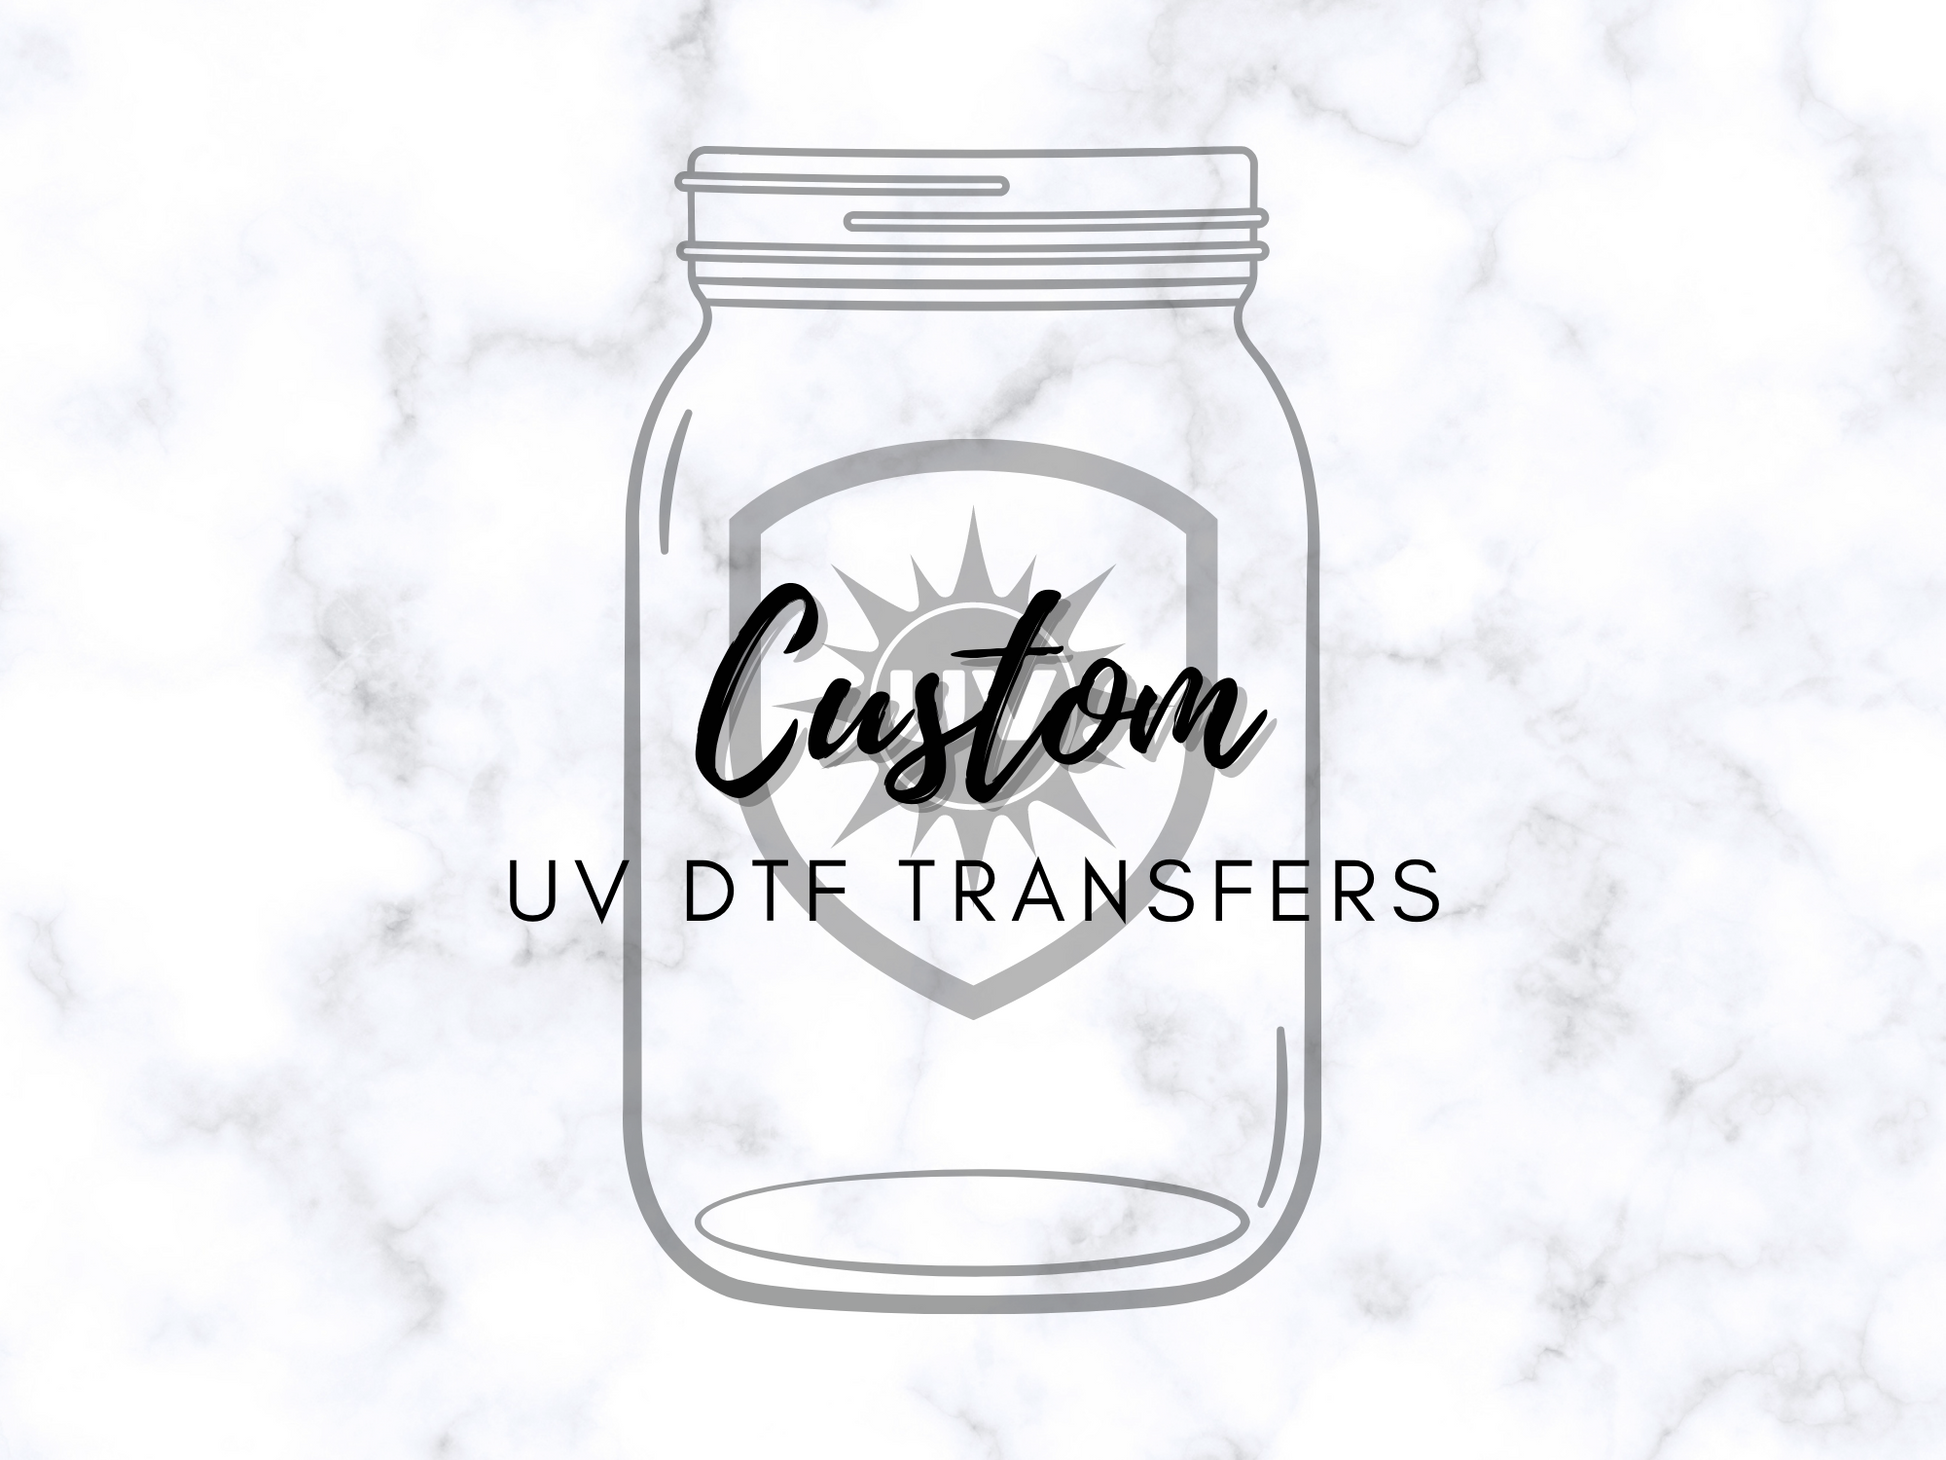 Custom Design Clear Film UV Dtf Cup Wraps UV Dtf Cup Wrap Transfers - China UV  Dtf Cup Wraps, UV Dtf Cup Wrap Transfers